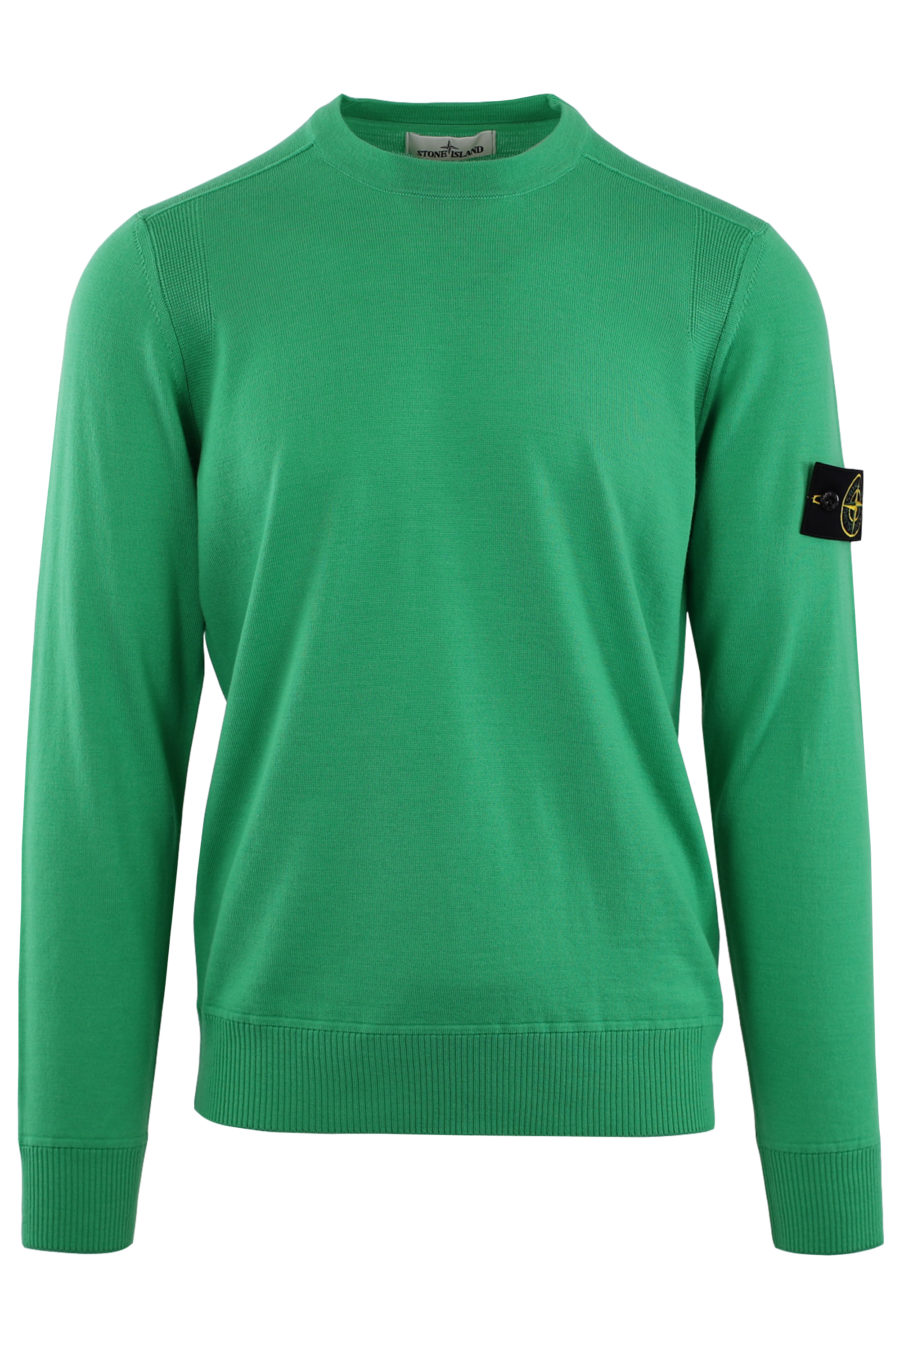 Jersey verde de lana con logo parche - IMG 9126